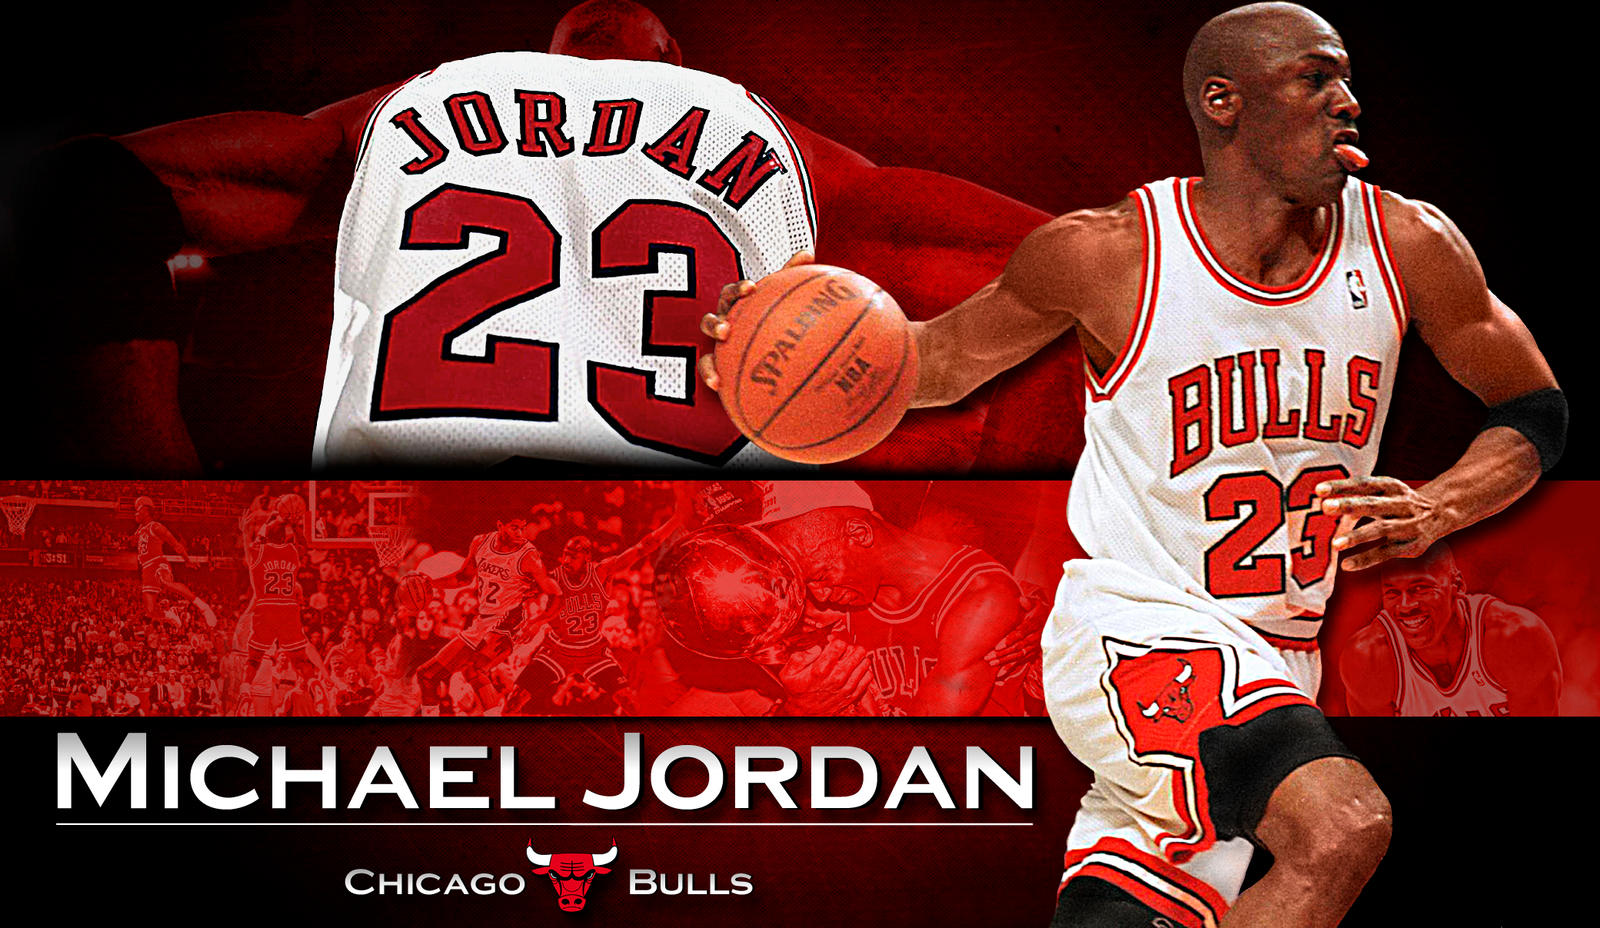 Michael Jordan Wallpaper by skythlee on DeviantArt